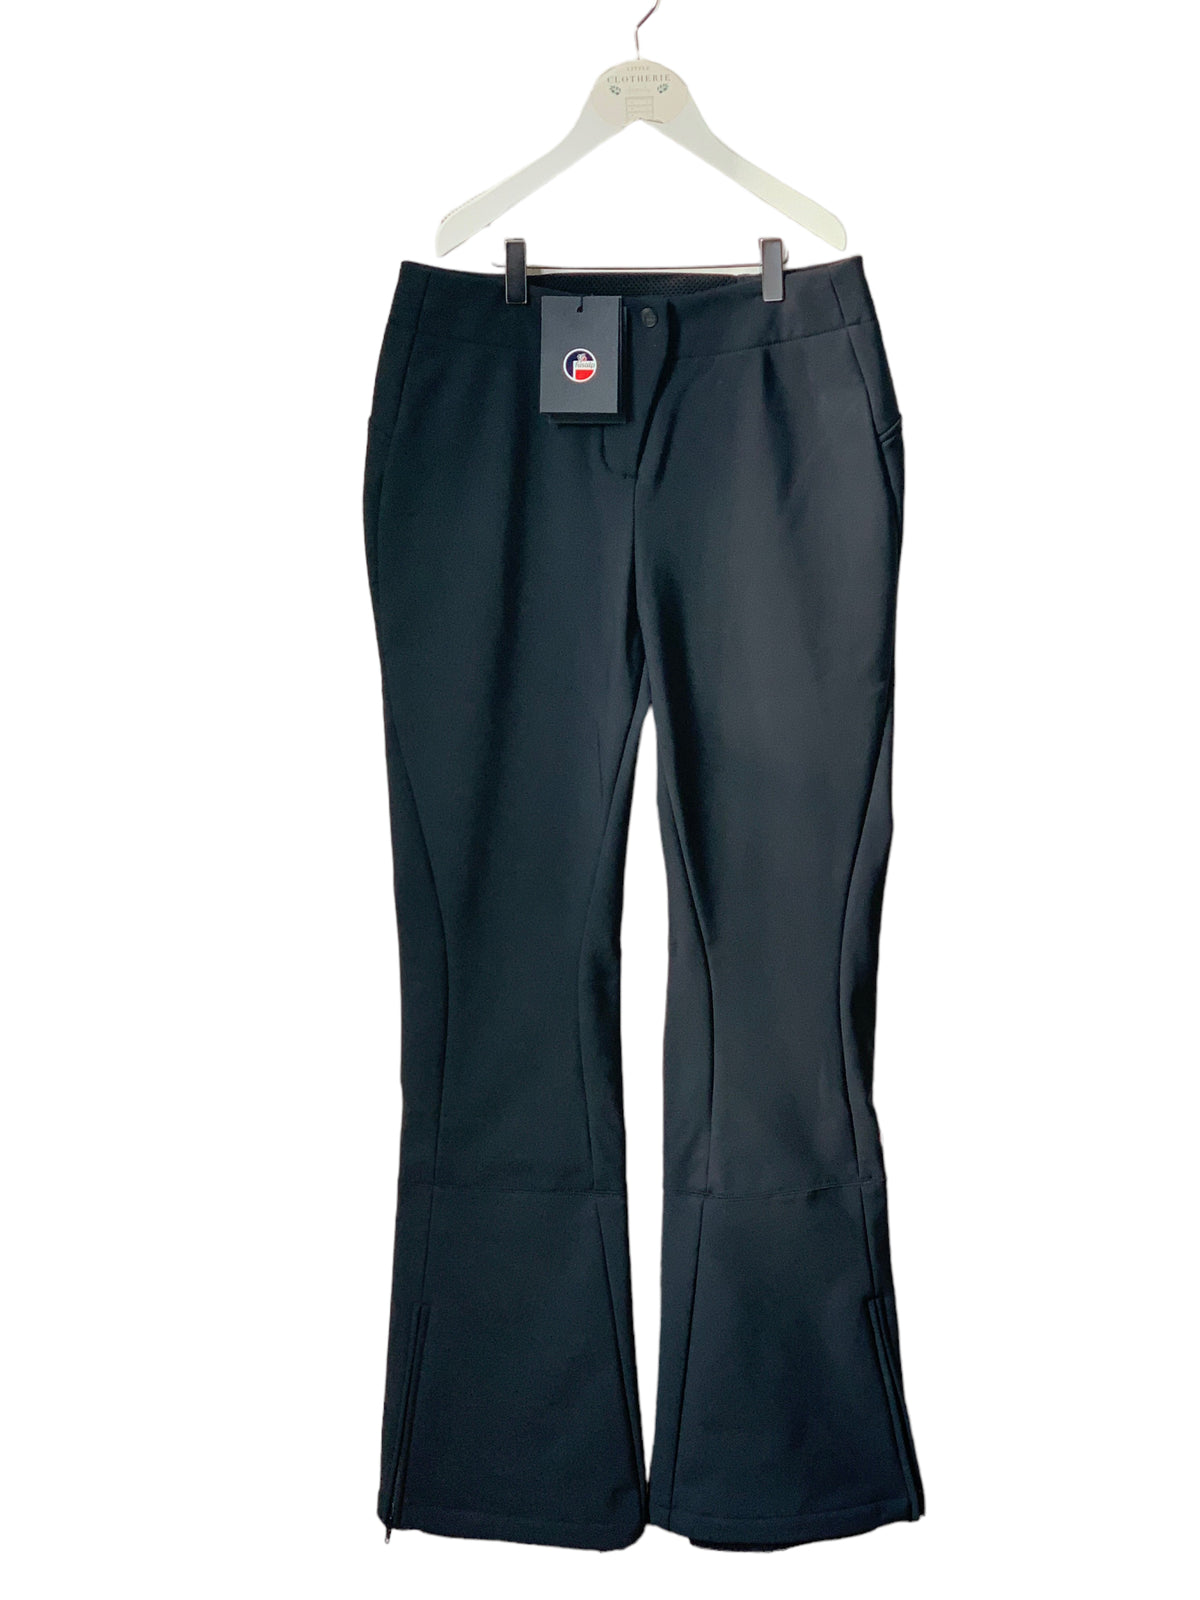 Pantalon noir ski Femme FUSALP taille 40 (36/38)